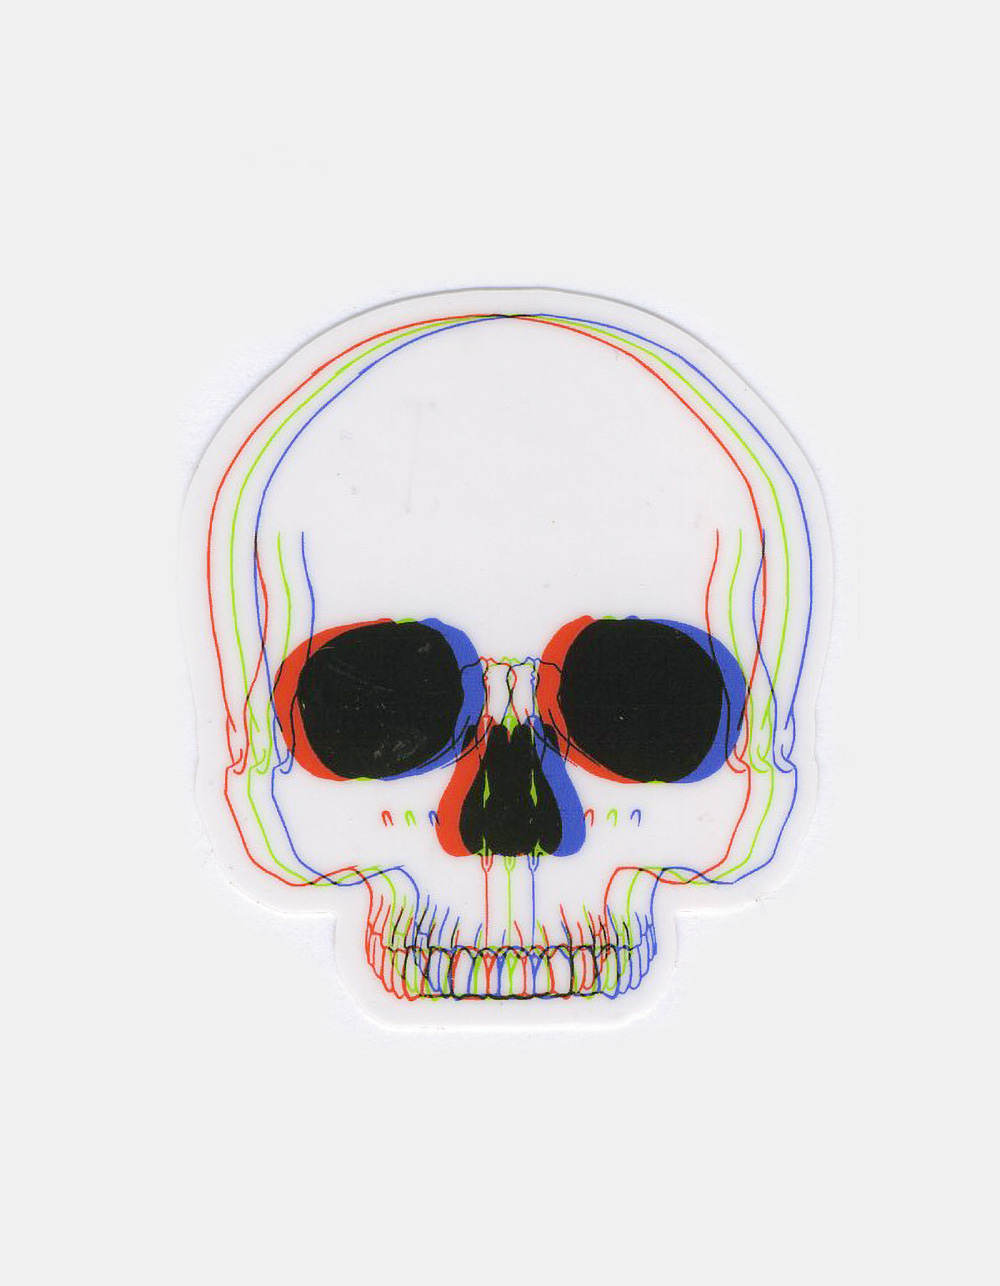 STICKER CABANA Blurry Skull Sticker